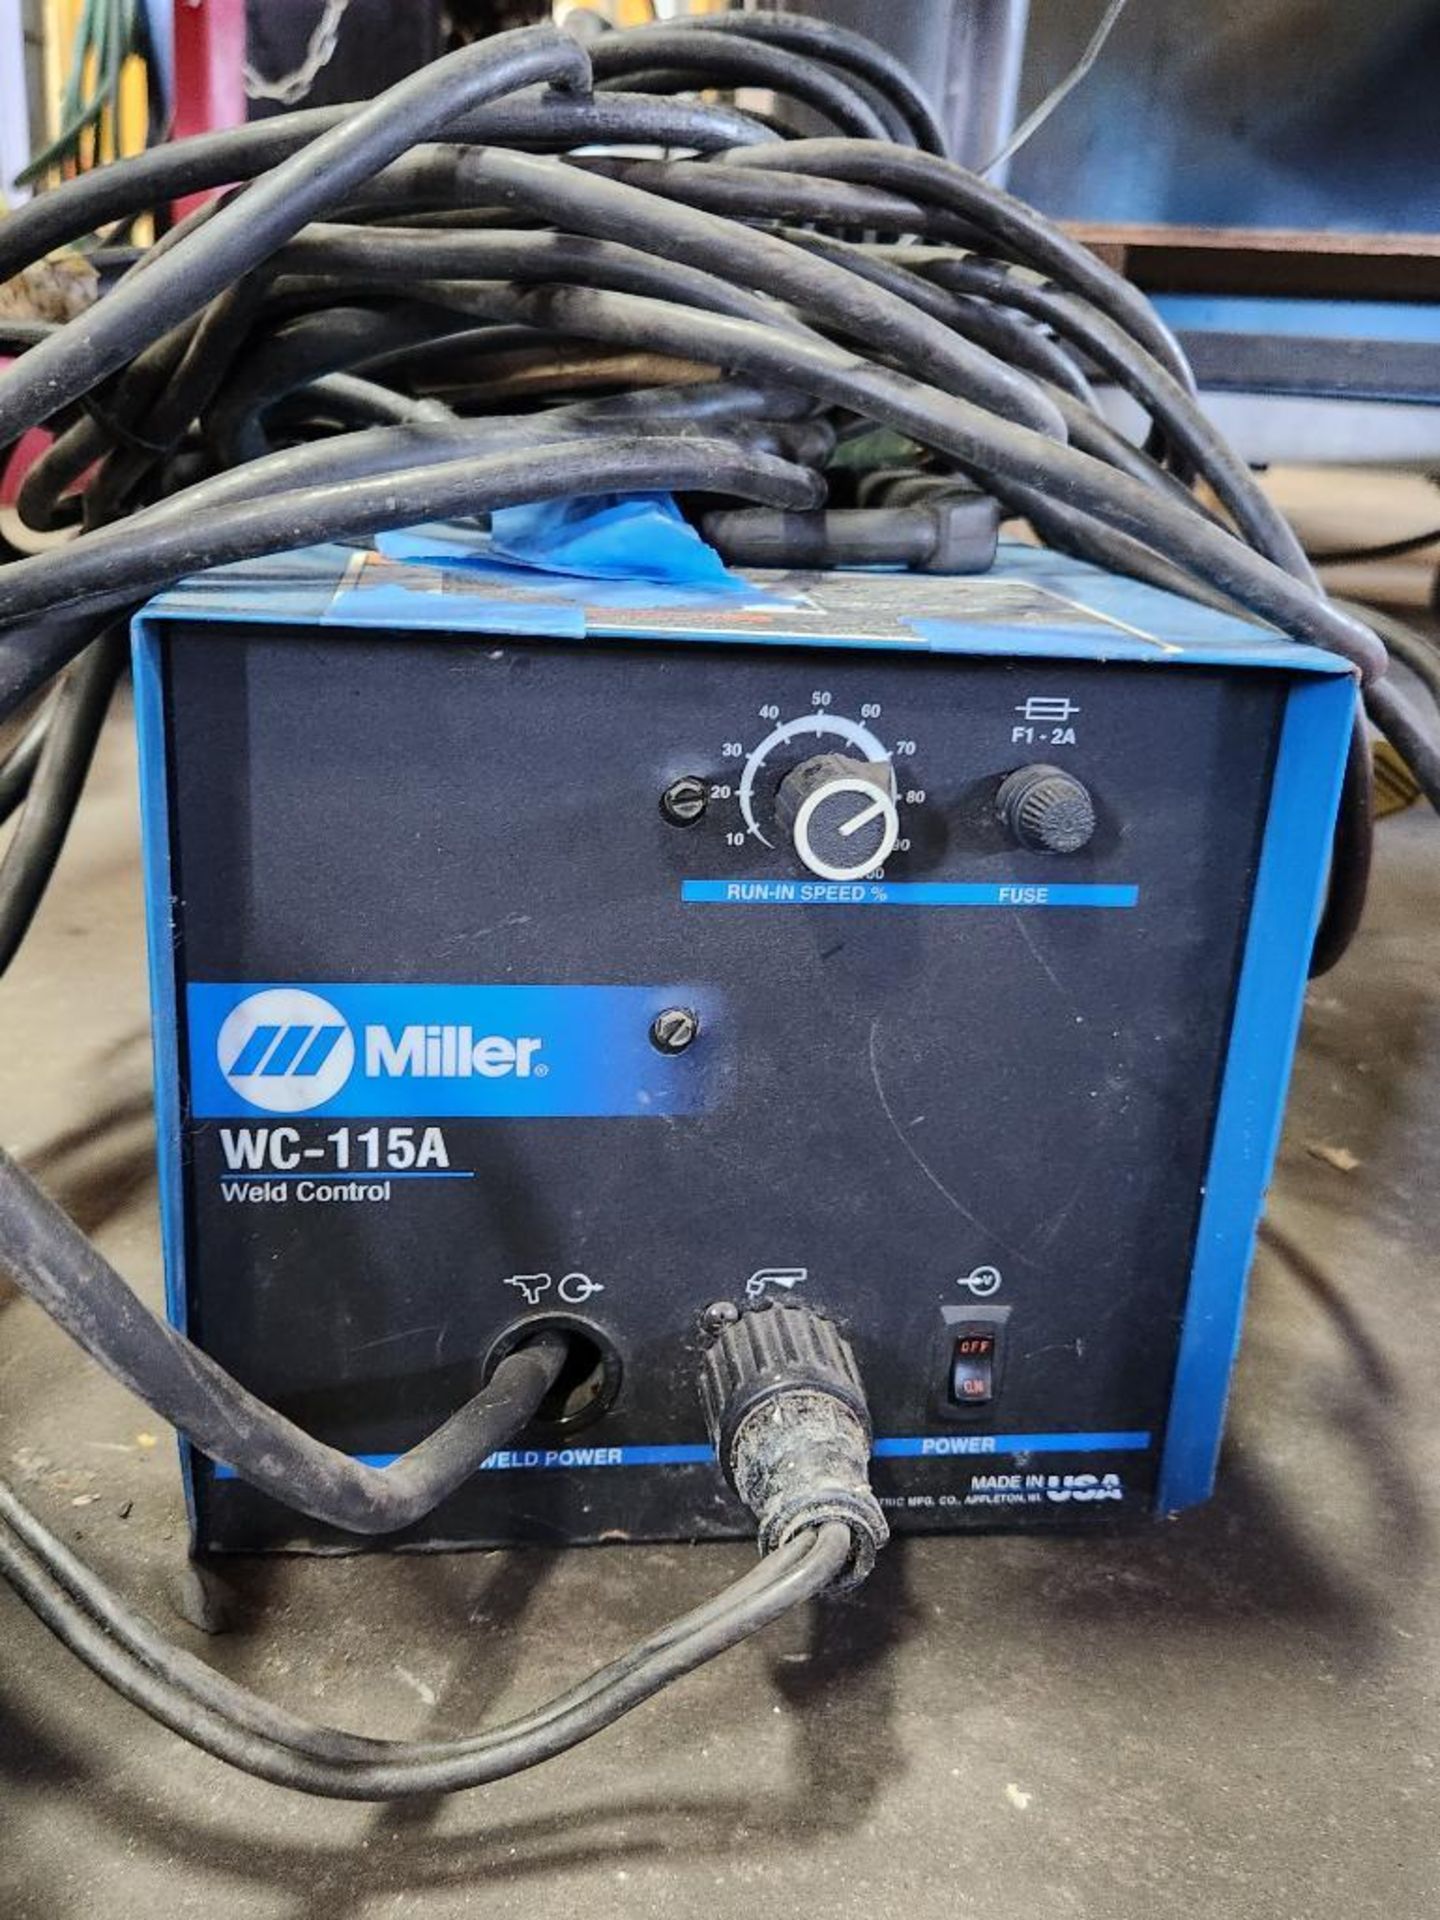 Miller WC-115A Weld Control, 115V, Model 137546-1, S/N LG077311, & Miller Spoolmatic 30A Wire Feeder